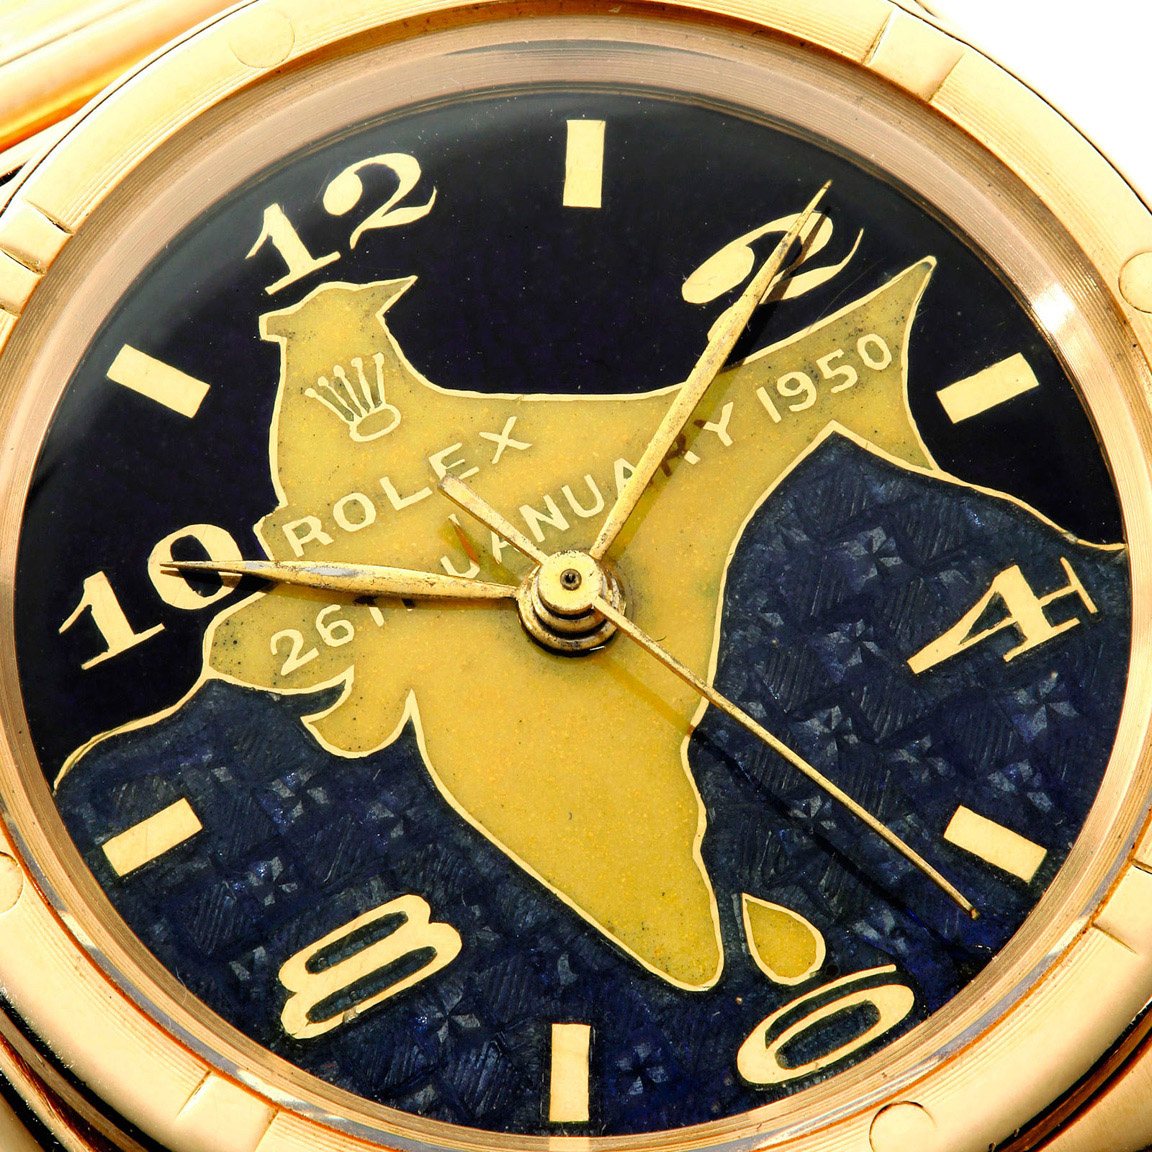 Dr. Rajendra Prasad's Gold Rolex Oyster watch